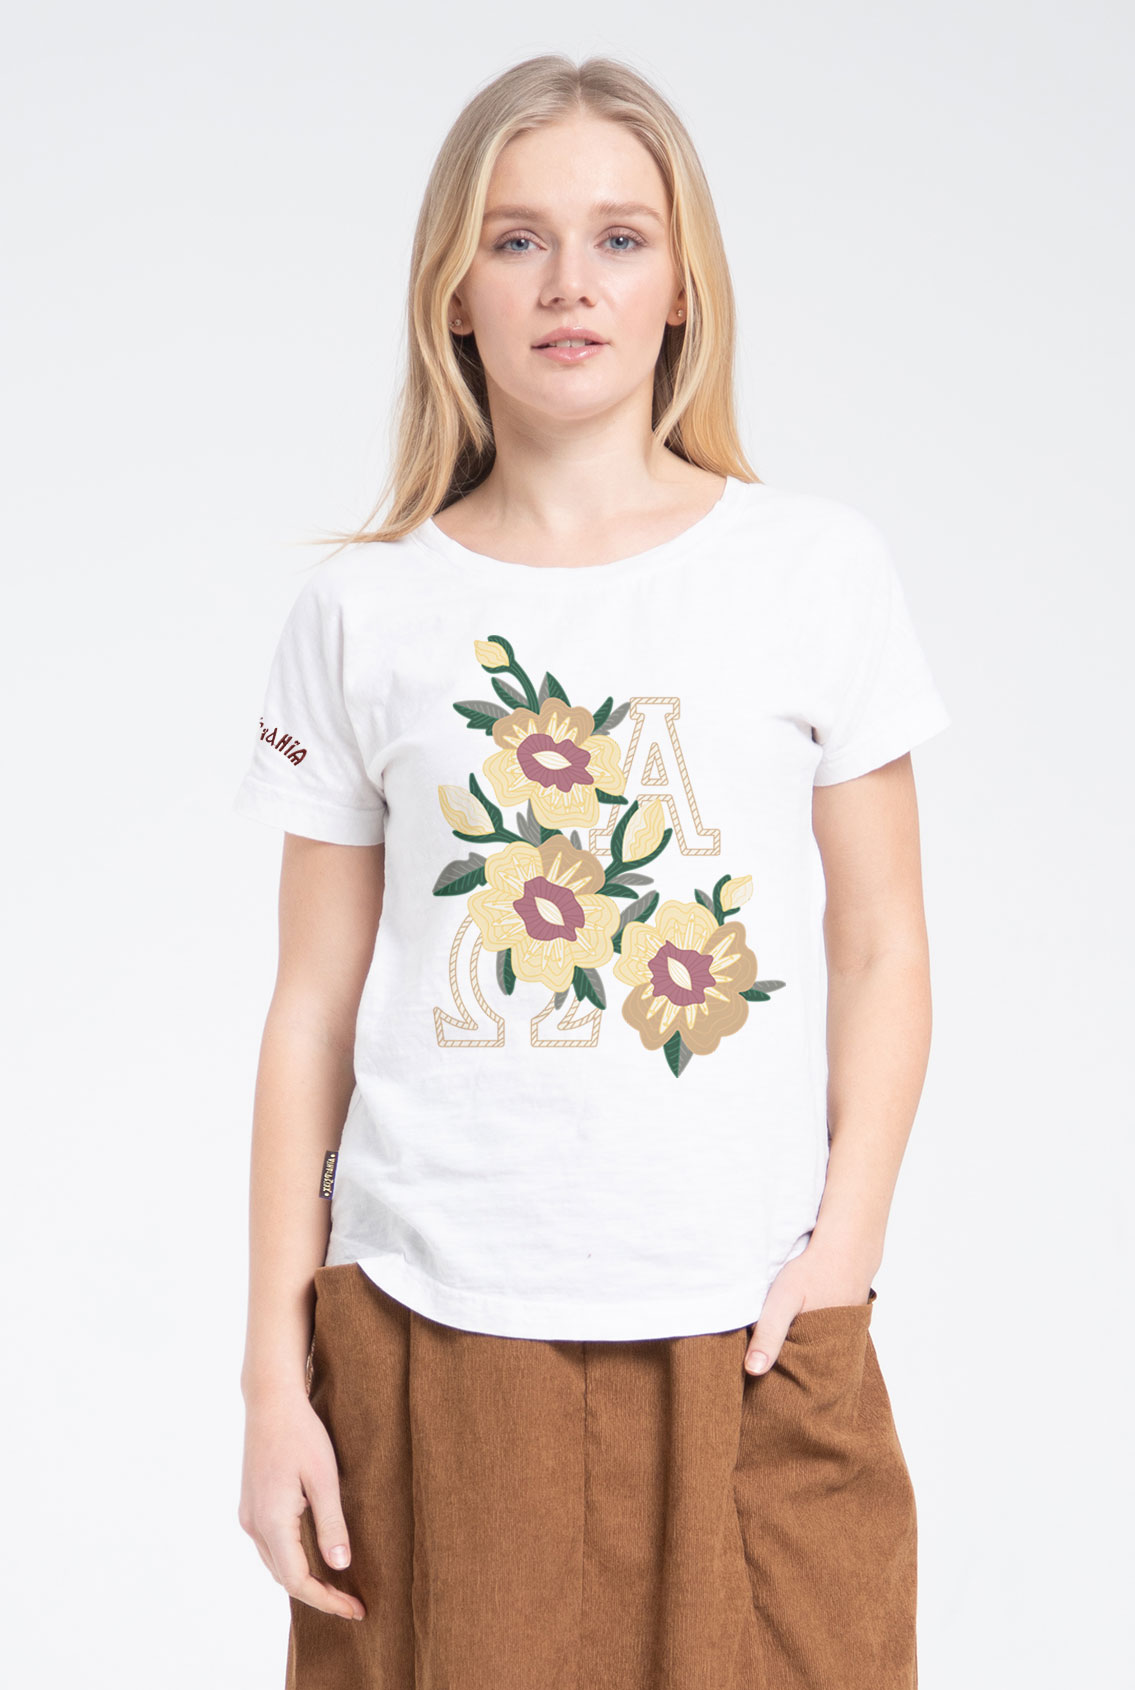 women's t-shirt with christian symbols